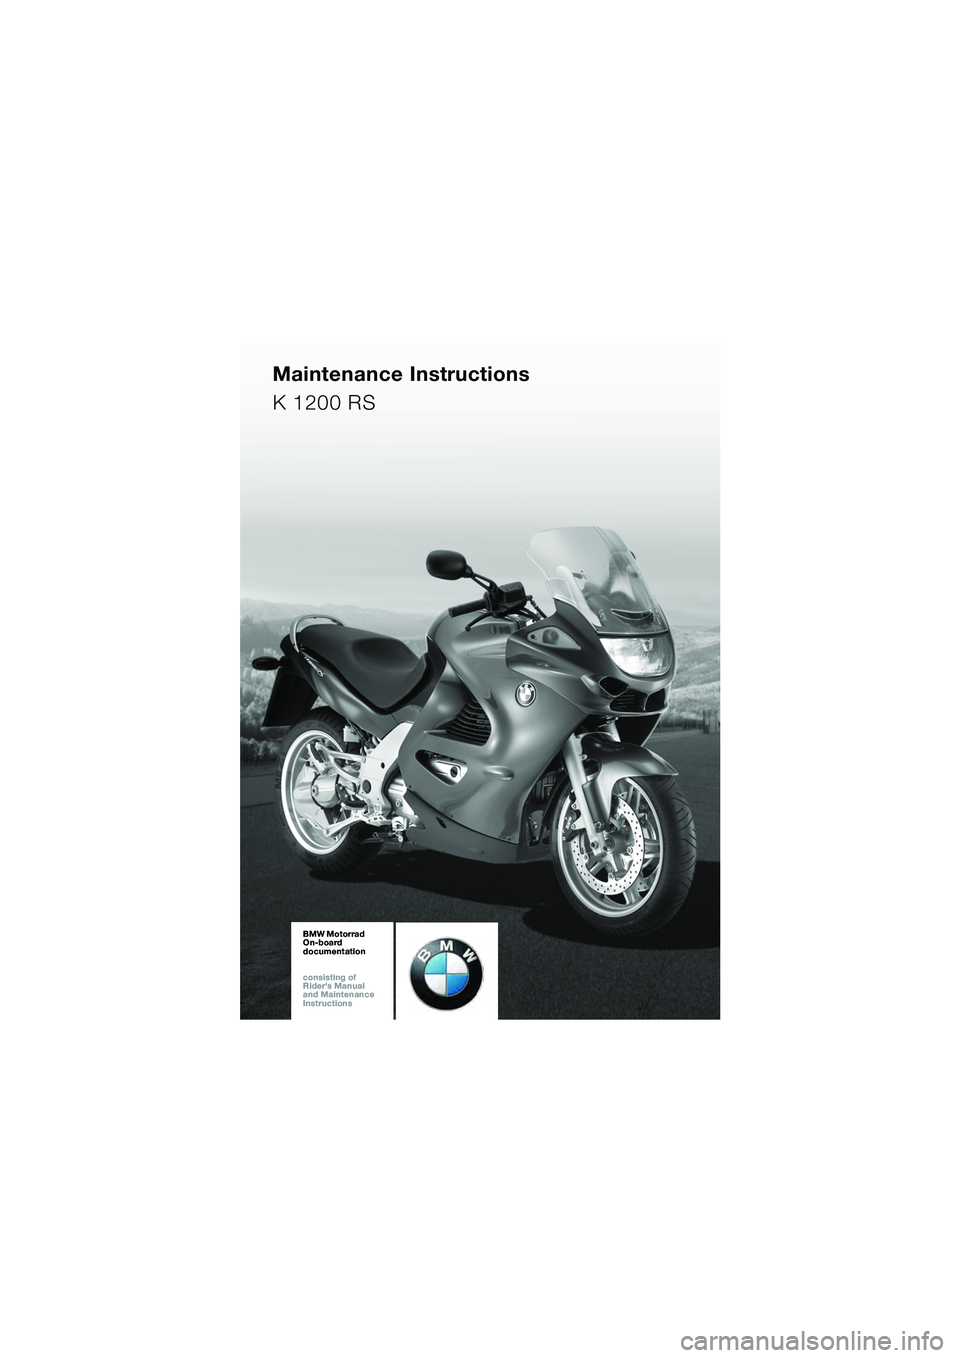 BMW MOTORRAD K 1200 RS 2004  Riders Manual (in English) 1
BMW Motorrad
On-board  
documentation
consisting of  
Riders Manual  
and Maintenance  
InstructionsBMW Motorrad
On-board  
documentation
consisting of  
Riders Manual  
and Maintenance  
Instruct